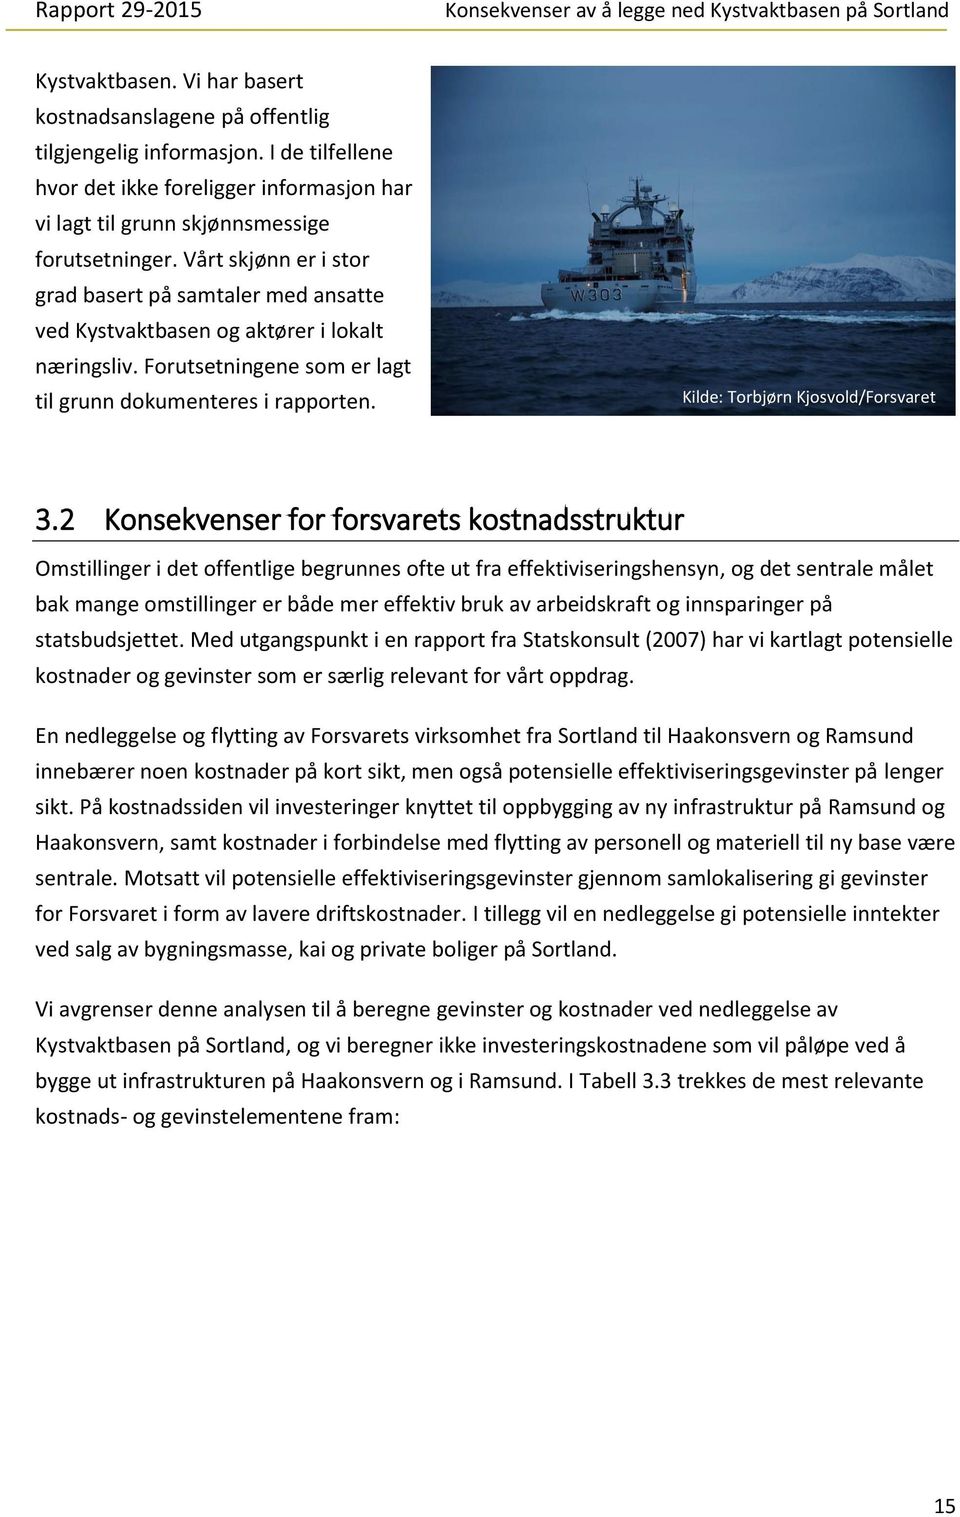 Kilde: Torbjørn Kjosvold/Forsvaret 3.